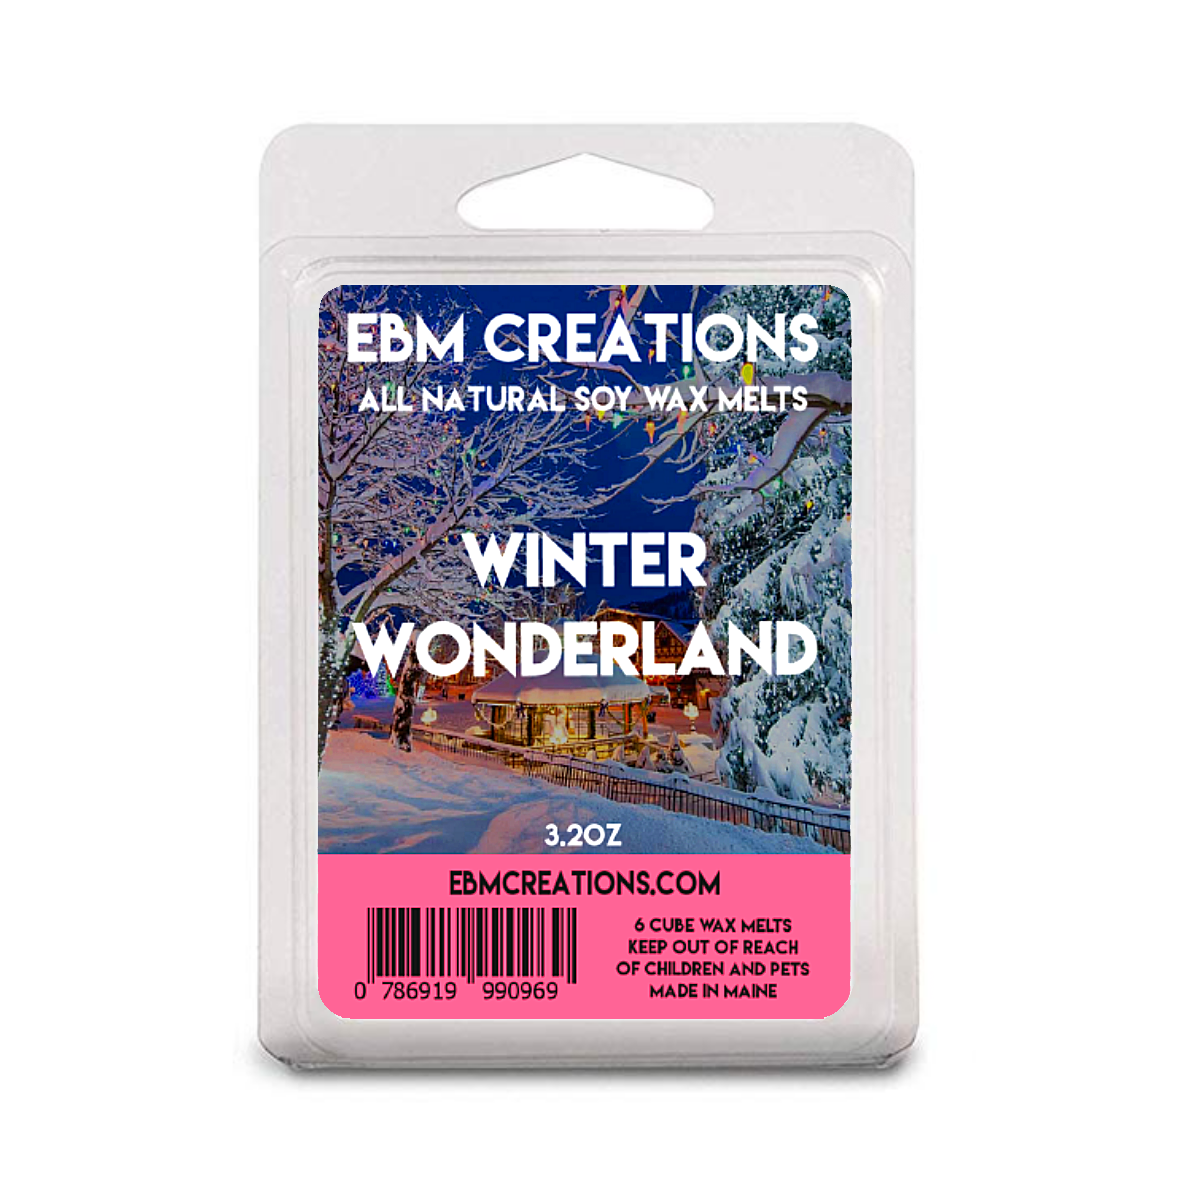 Winter Wonderland - 3.2 oz Clamshell